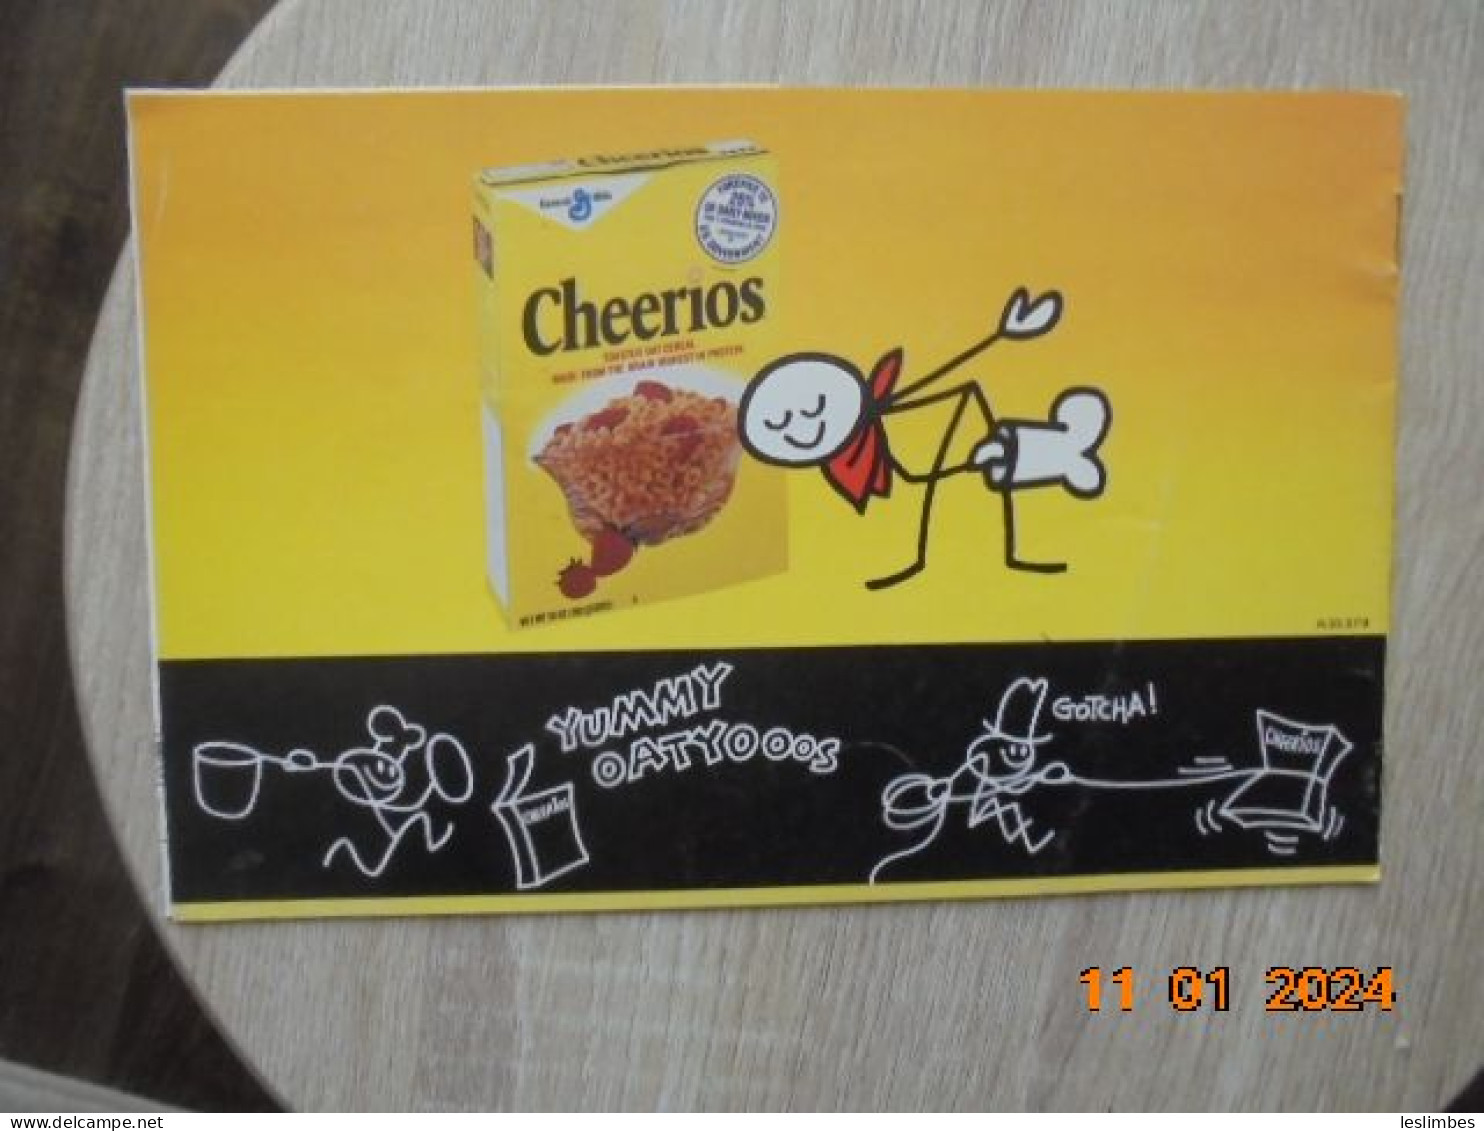 CHEERIODLE COOKBOOK FOR KIDS - Cheerios - General Mills, Inc. 1980 - Americana